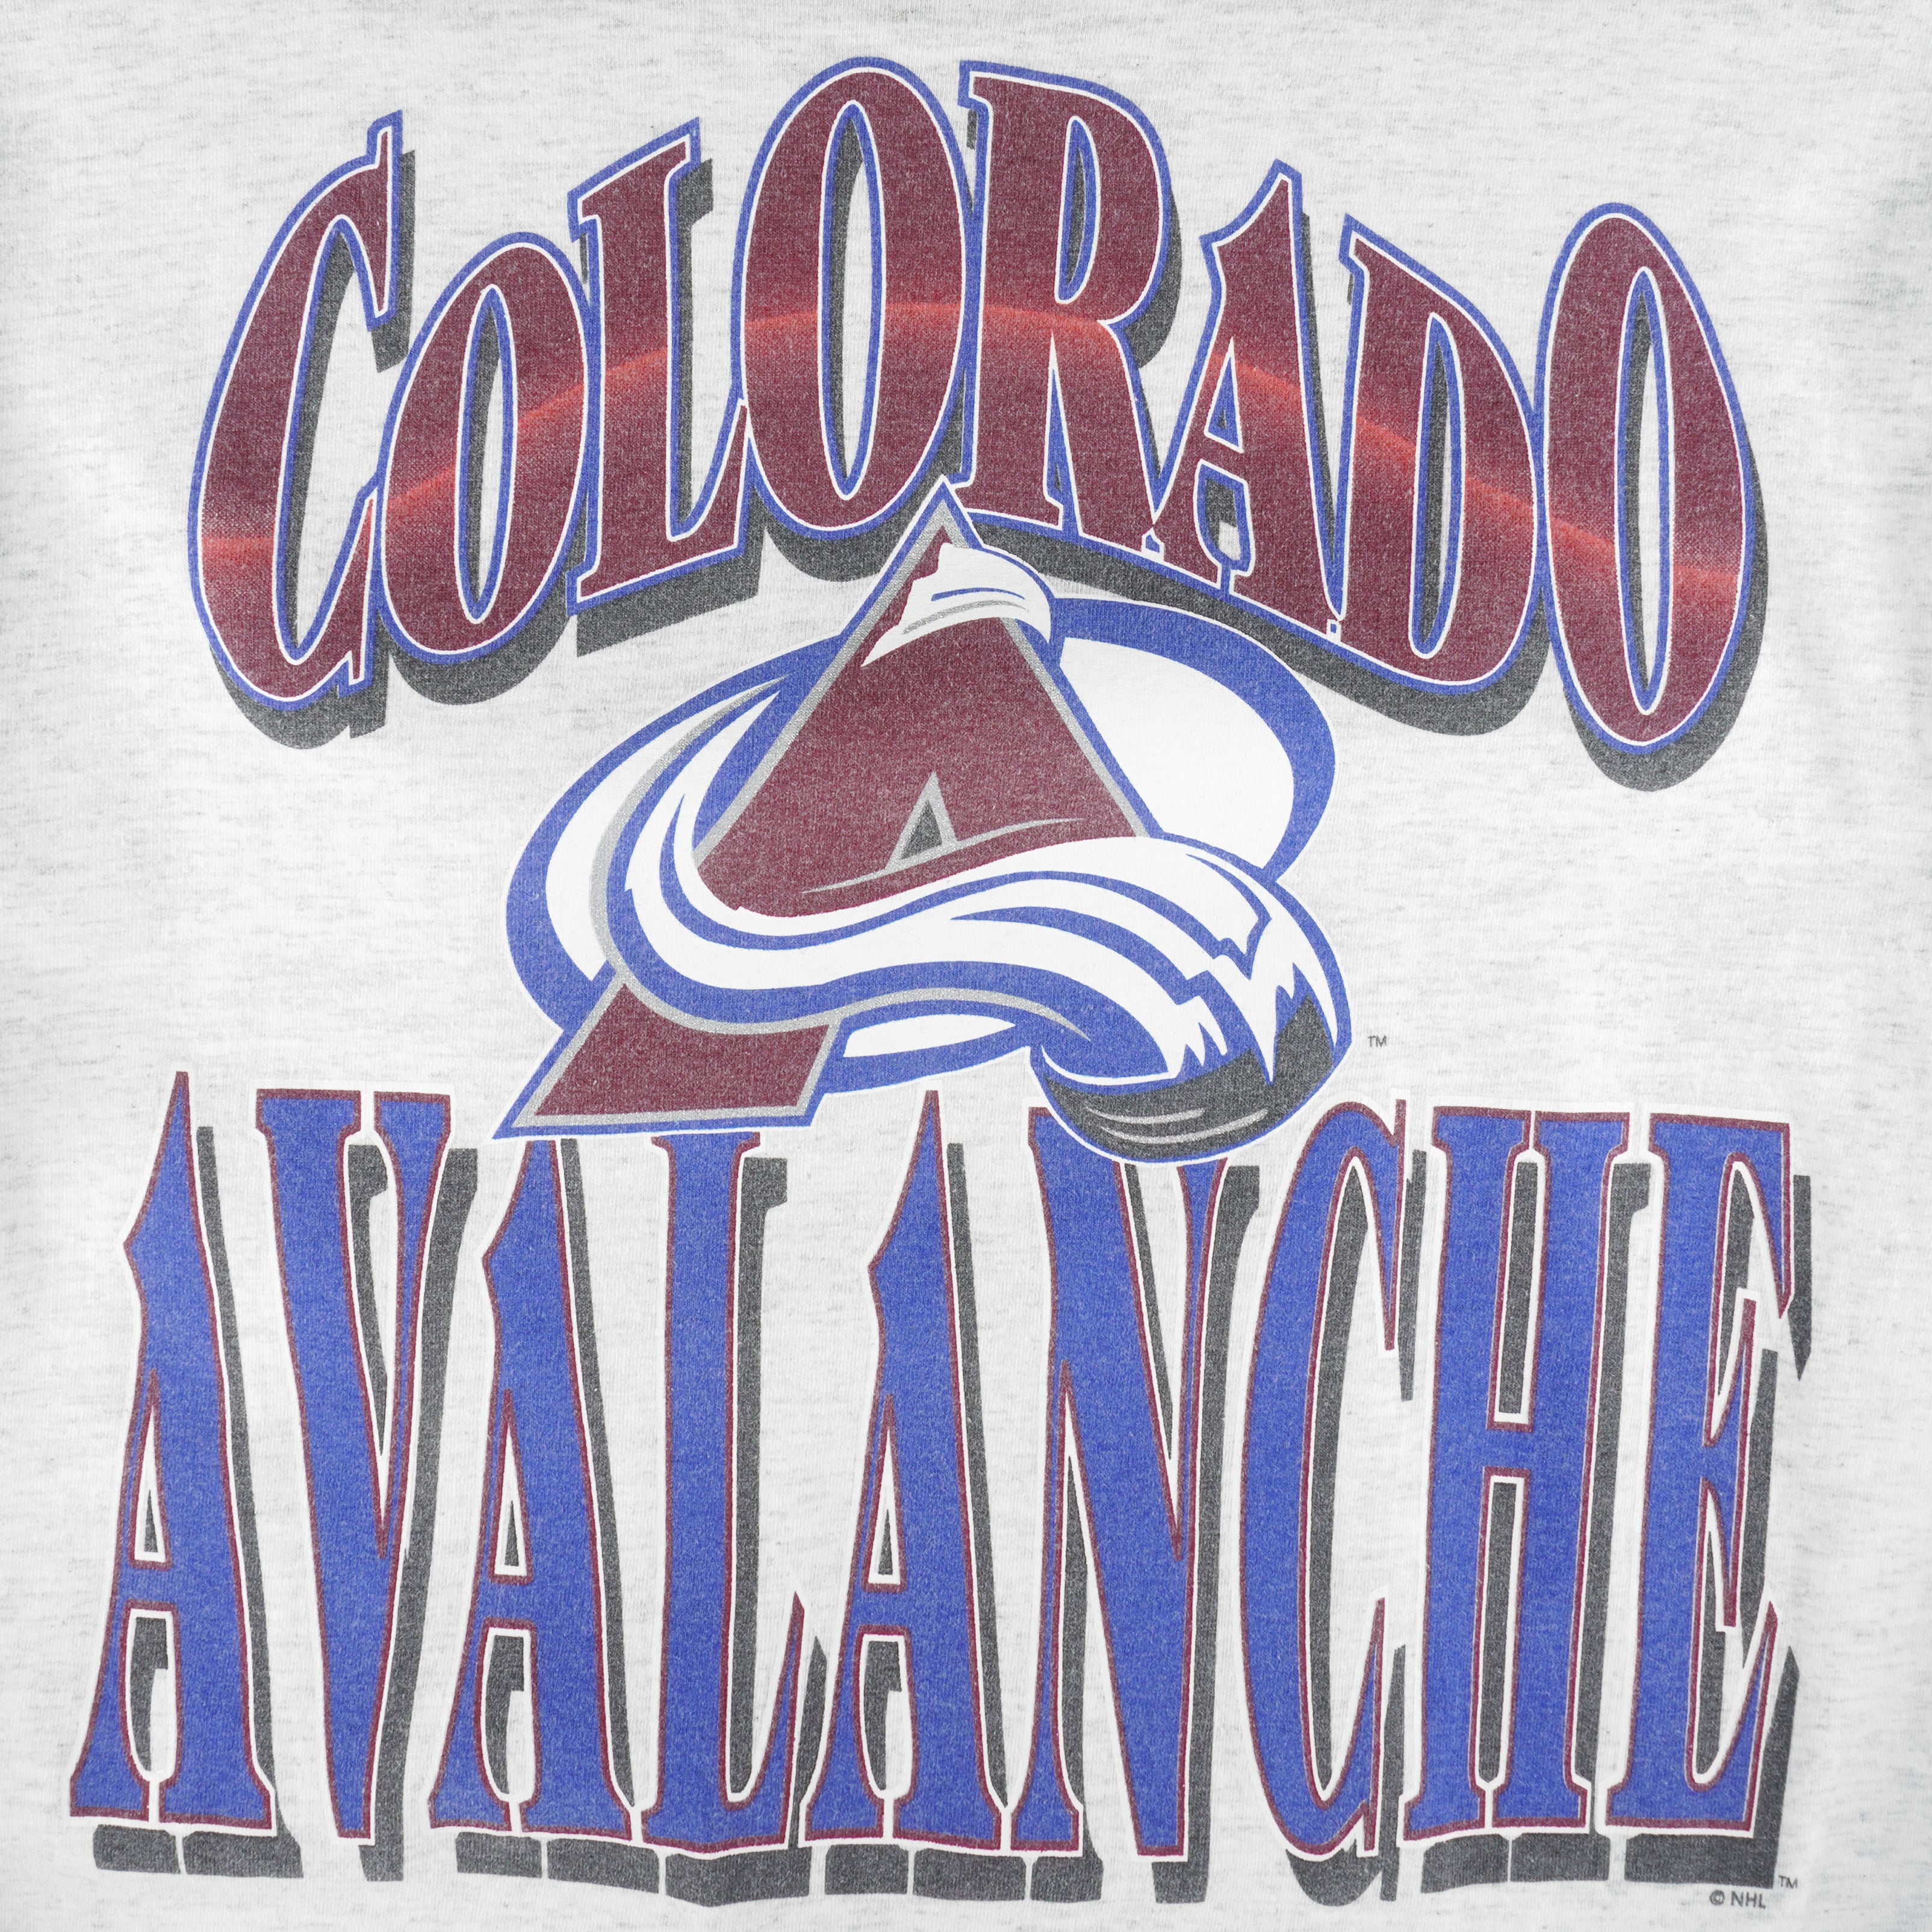 Colorado Avalanche Apparel, Merchandise & Gear - Avalanche Shop